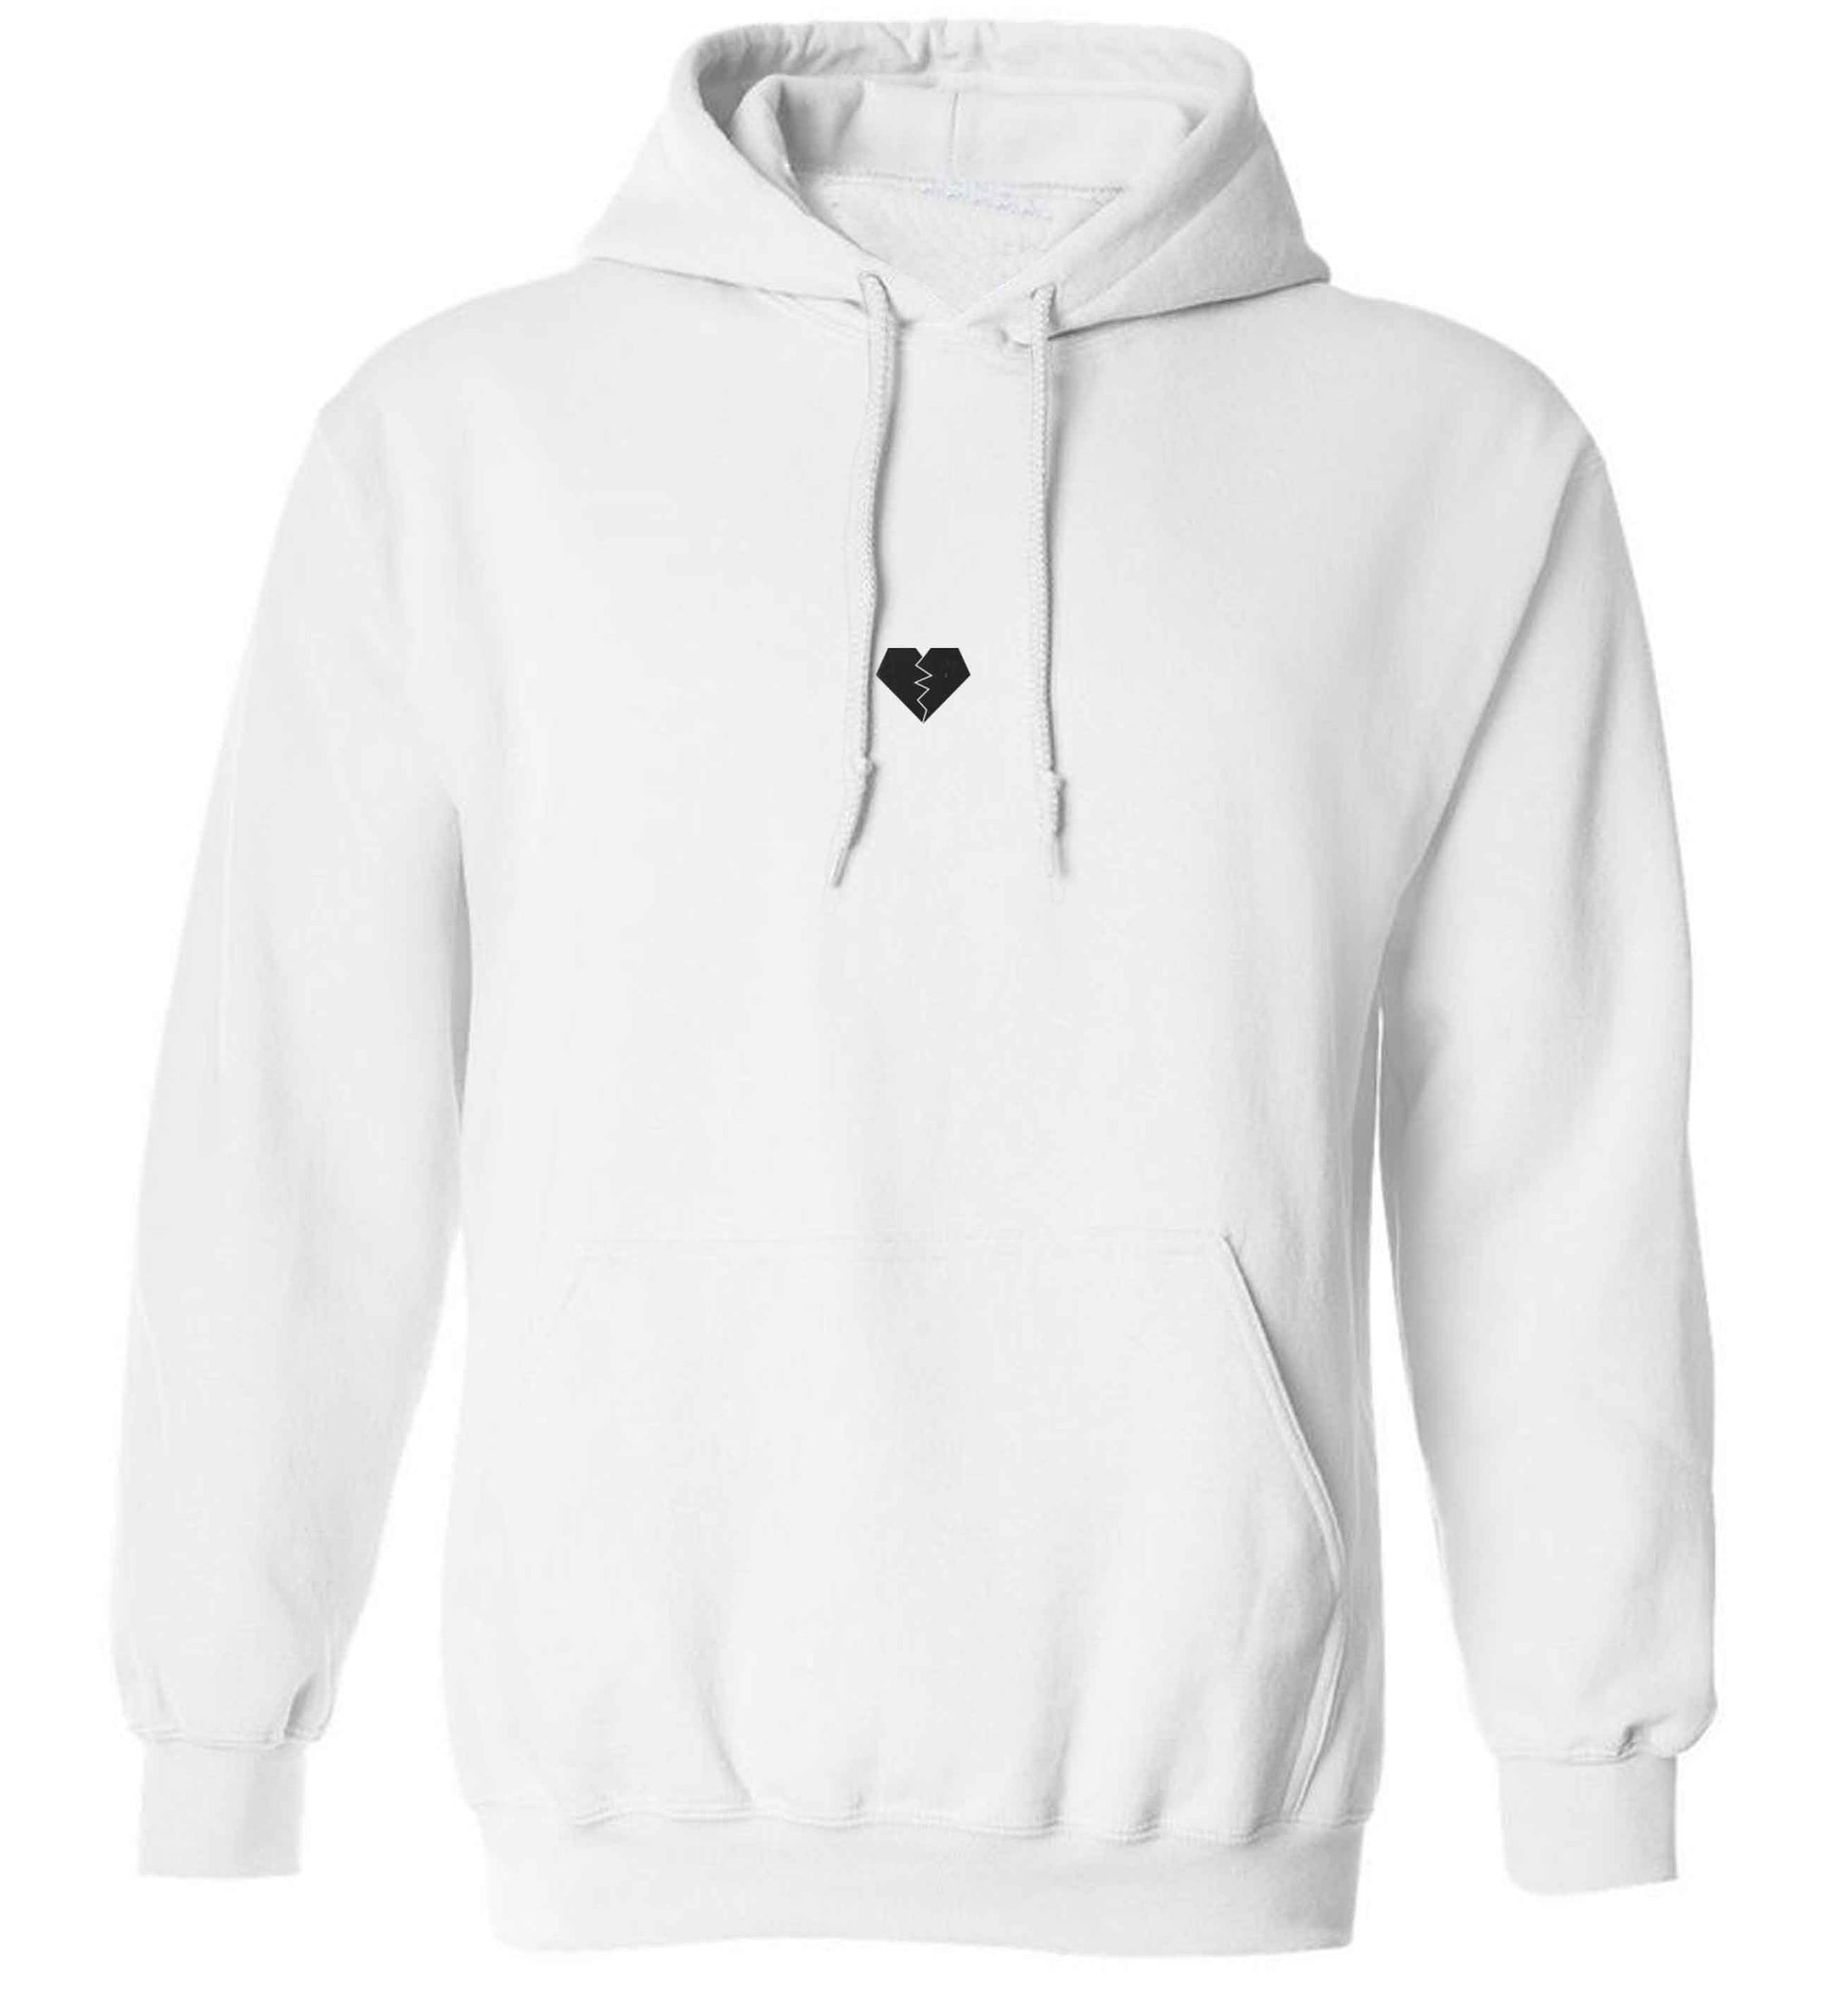 Tiny broken heart adults unisex white hoodie 2XL